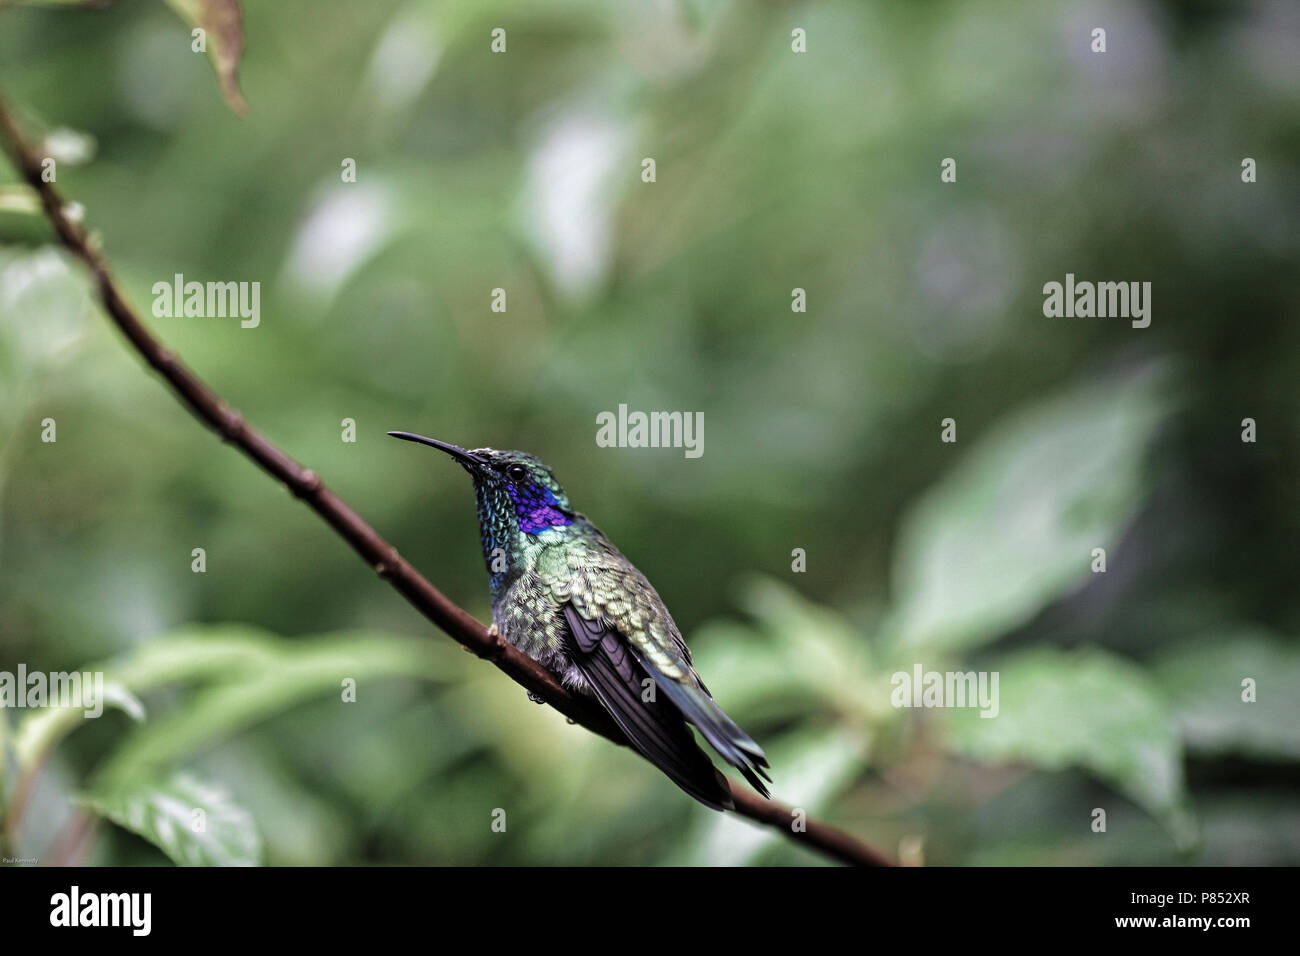 Sparkling Violet-Ear Hummingbird (Colibri coruscans) on branch, Costa Rica Stock Photo